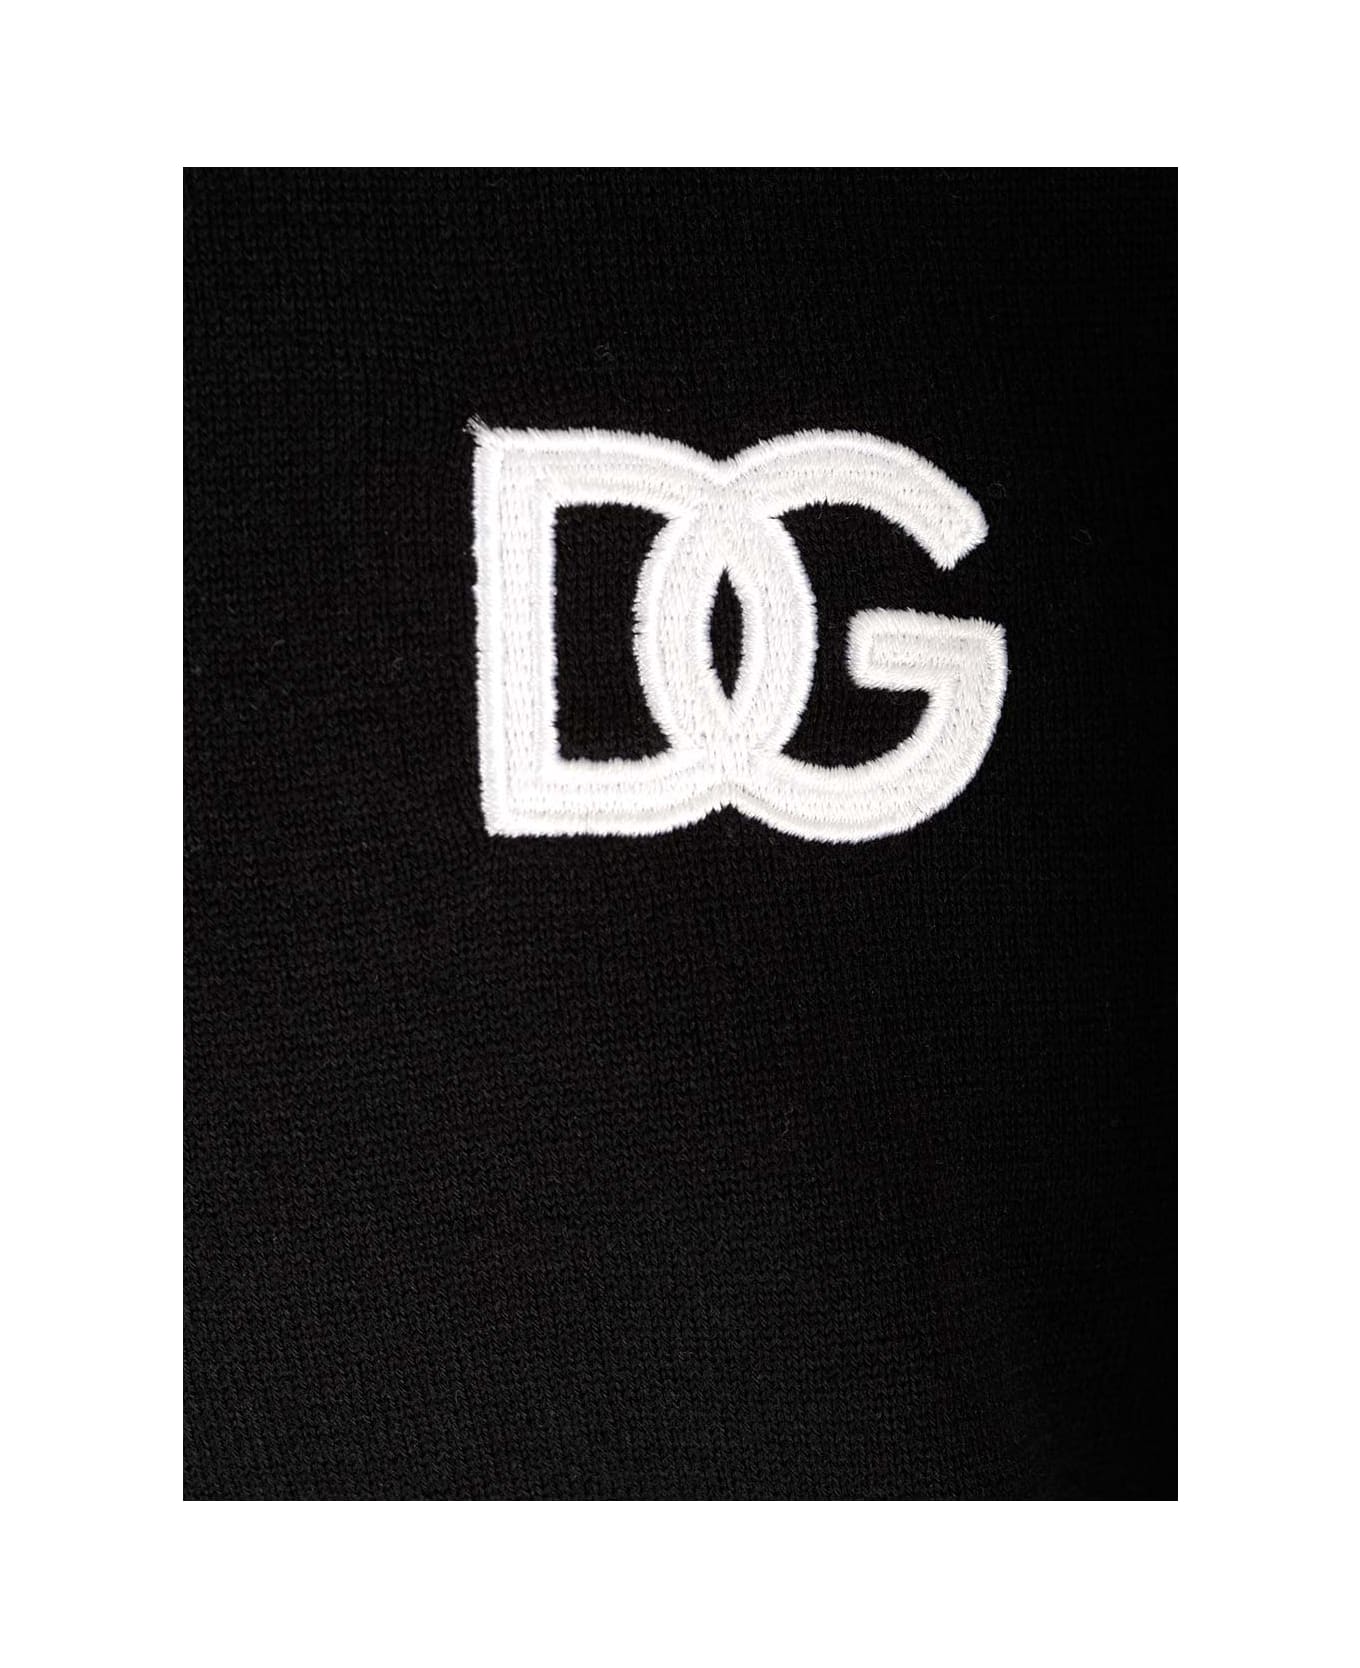 Dolce & Gabbana Slim Fit Polo Shirt - Black